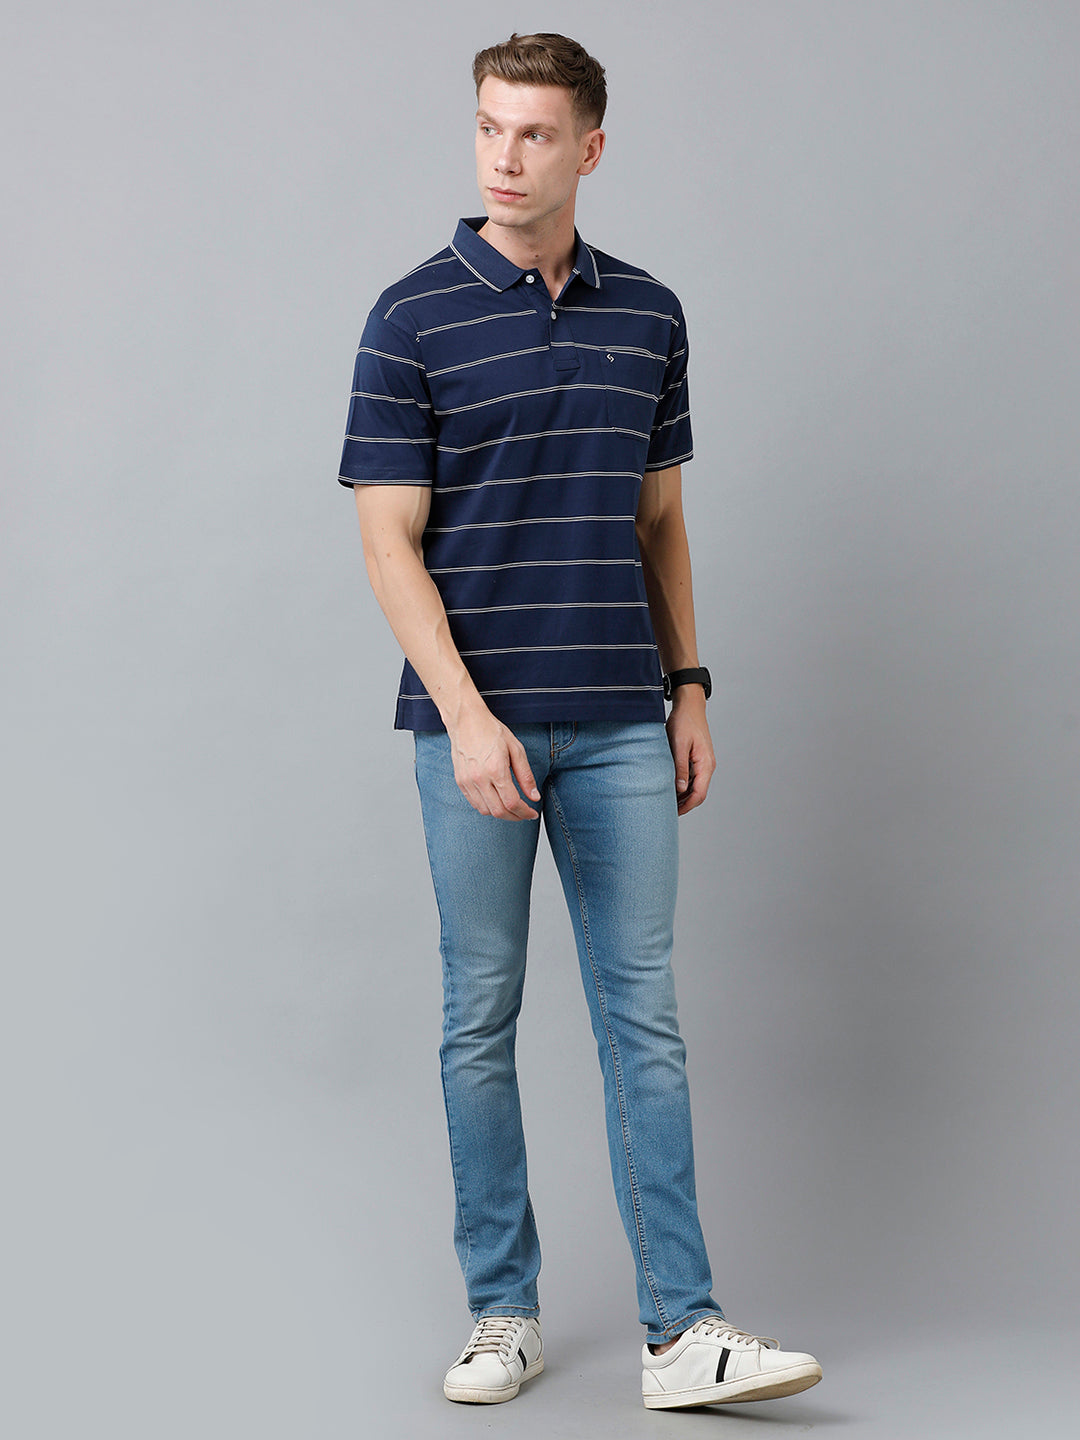 Classic Polo Men's Cotton Half Sleeve Striped Authentic Fit Polo Neck Dark Blue Color T-Shirt | Ap - 85 B